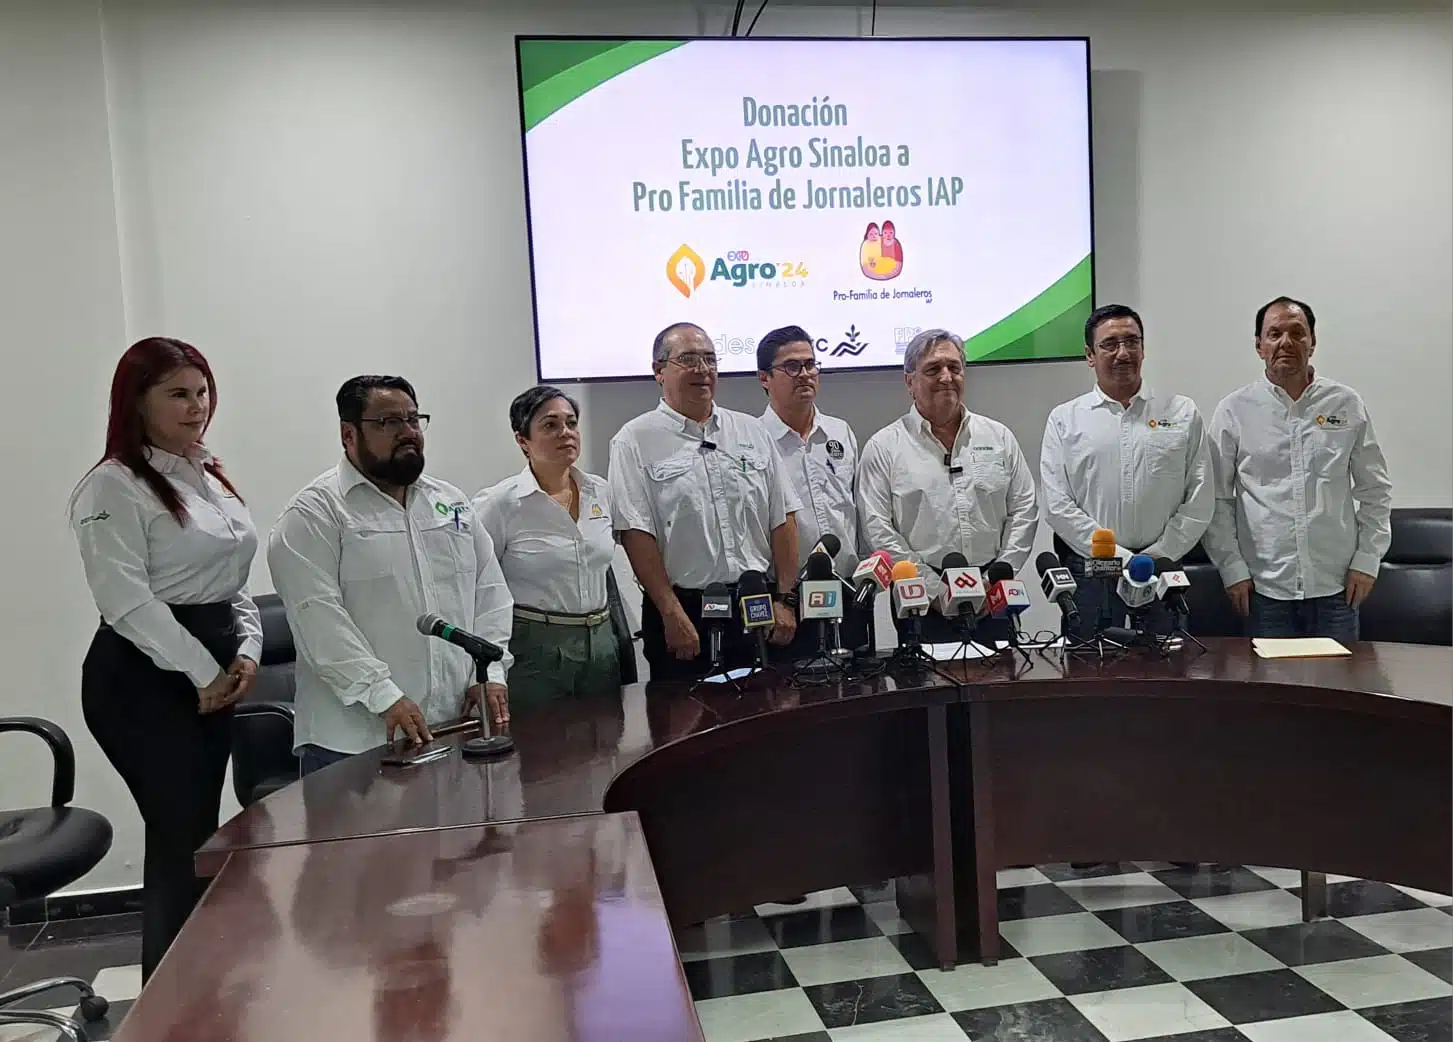 Expo Agro Sinaloa entrega donativo a Pro Familia de Jornaleros IAP